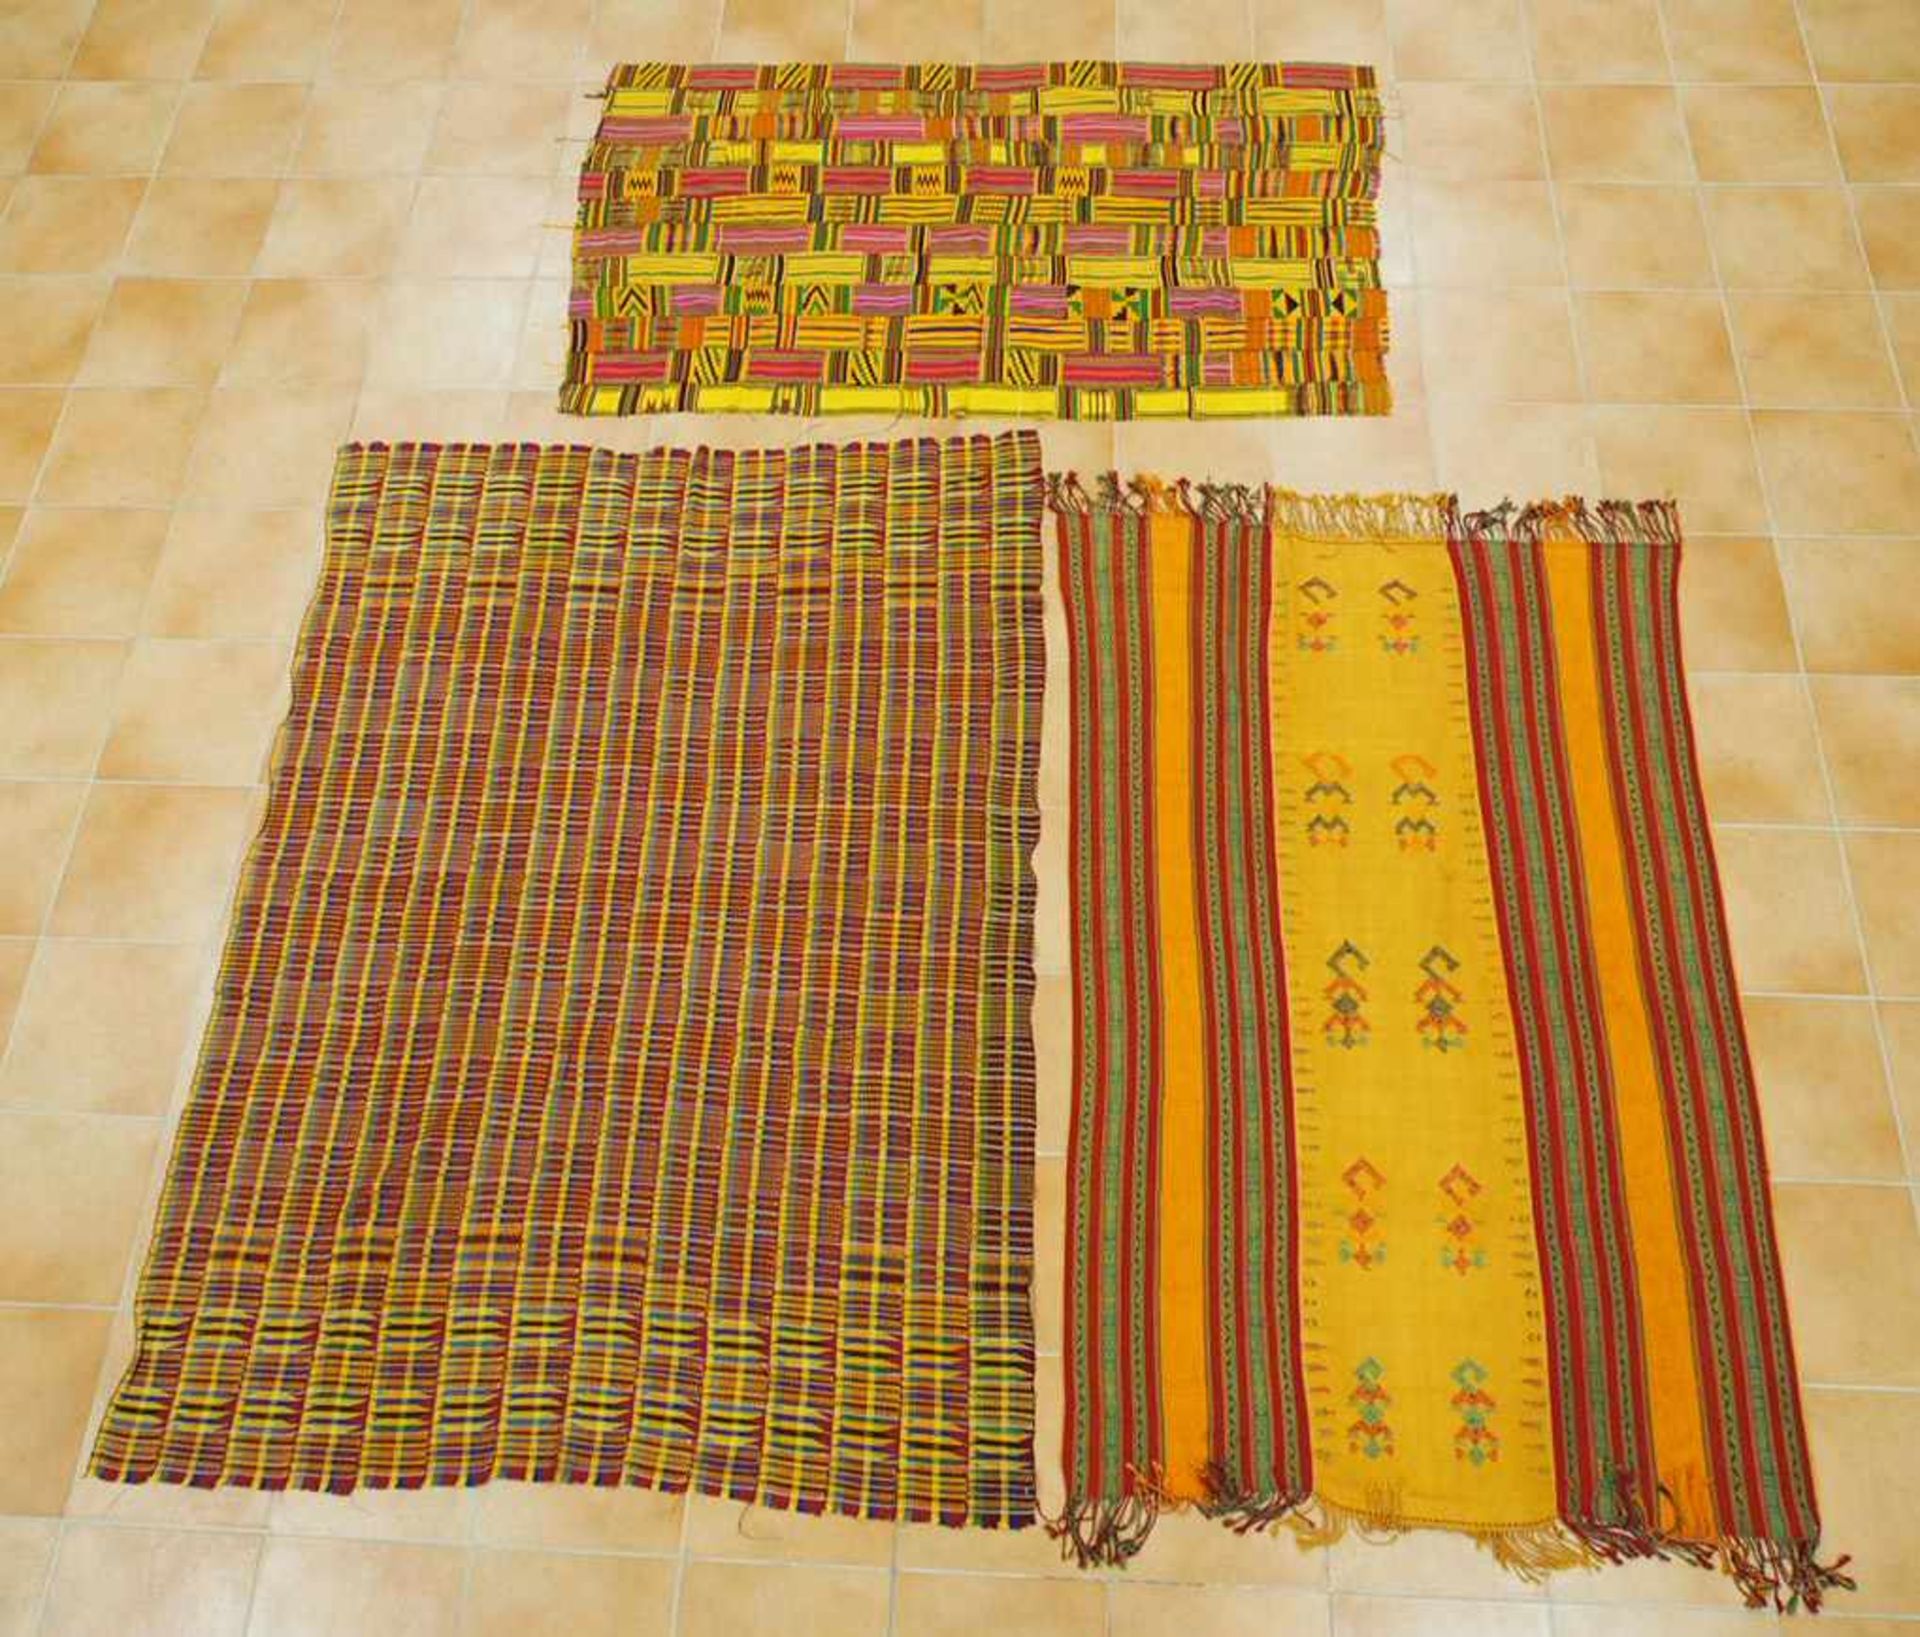 Drei Webtücherkente, Ghana 20. Jahrhundert, 192 x 142 cm, Zustand B- - -25.00 % buyer's premium on